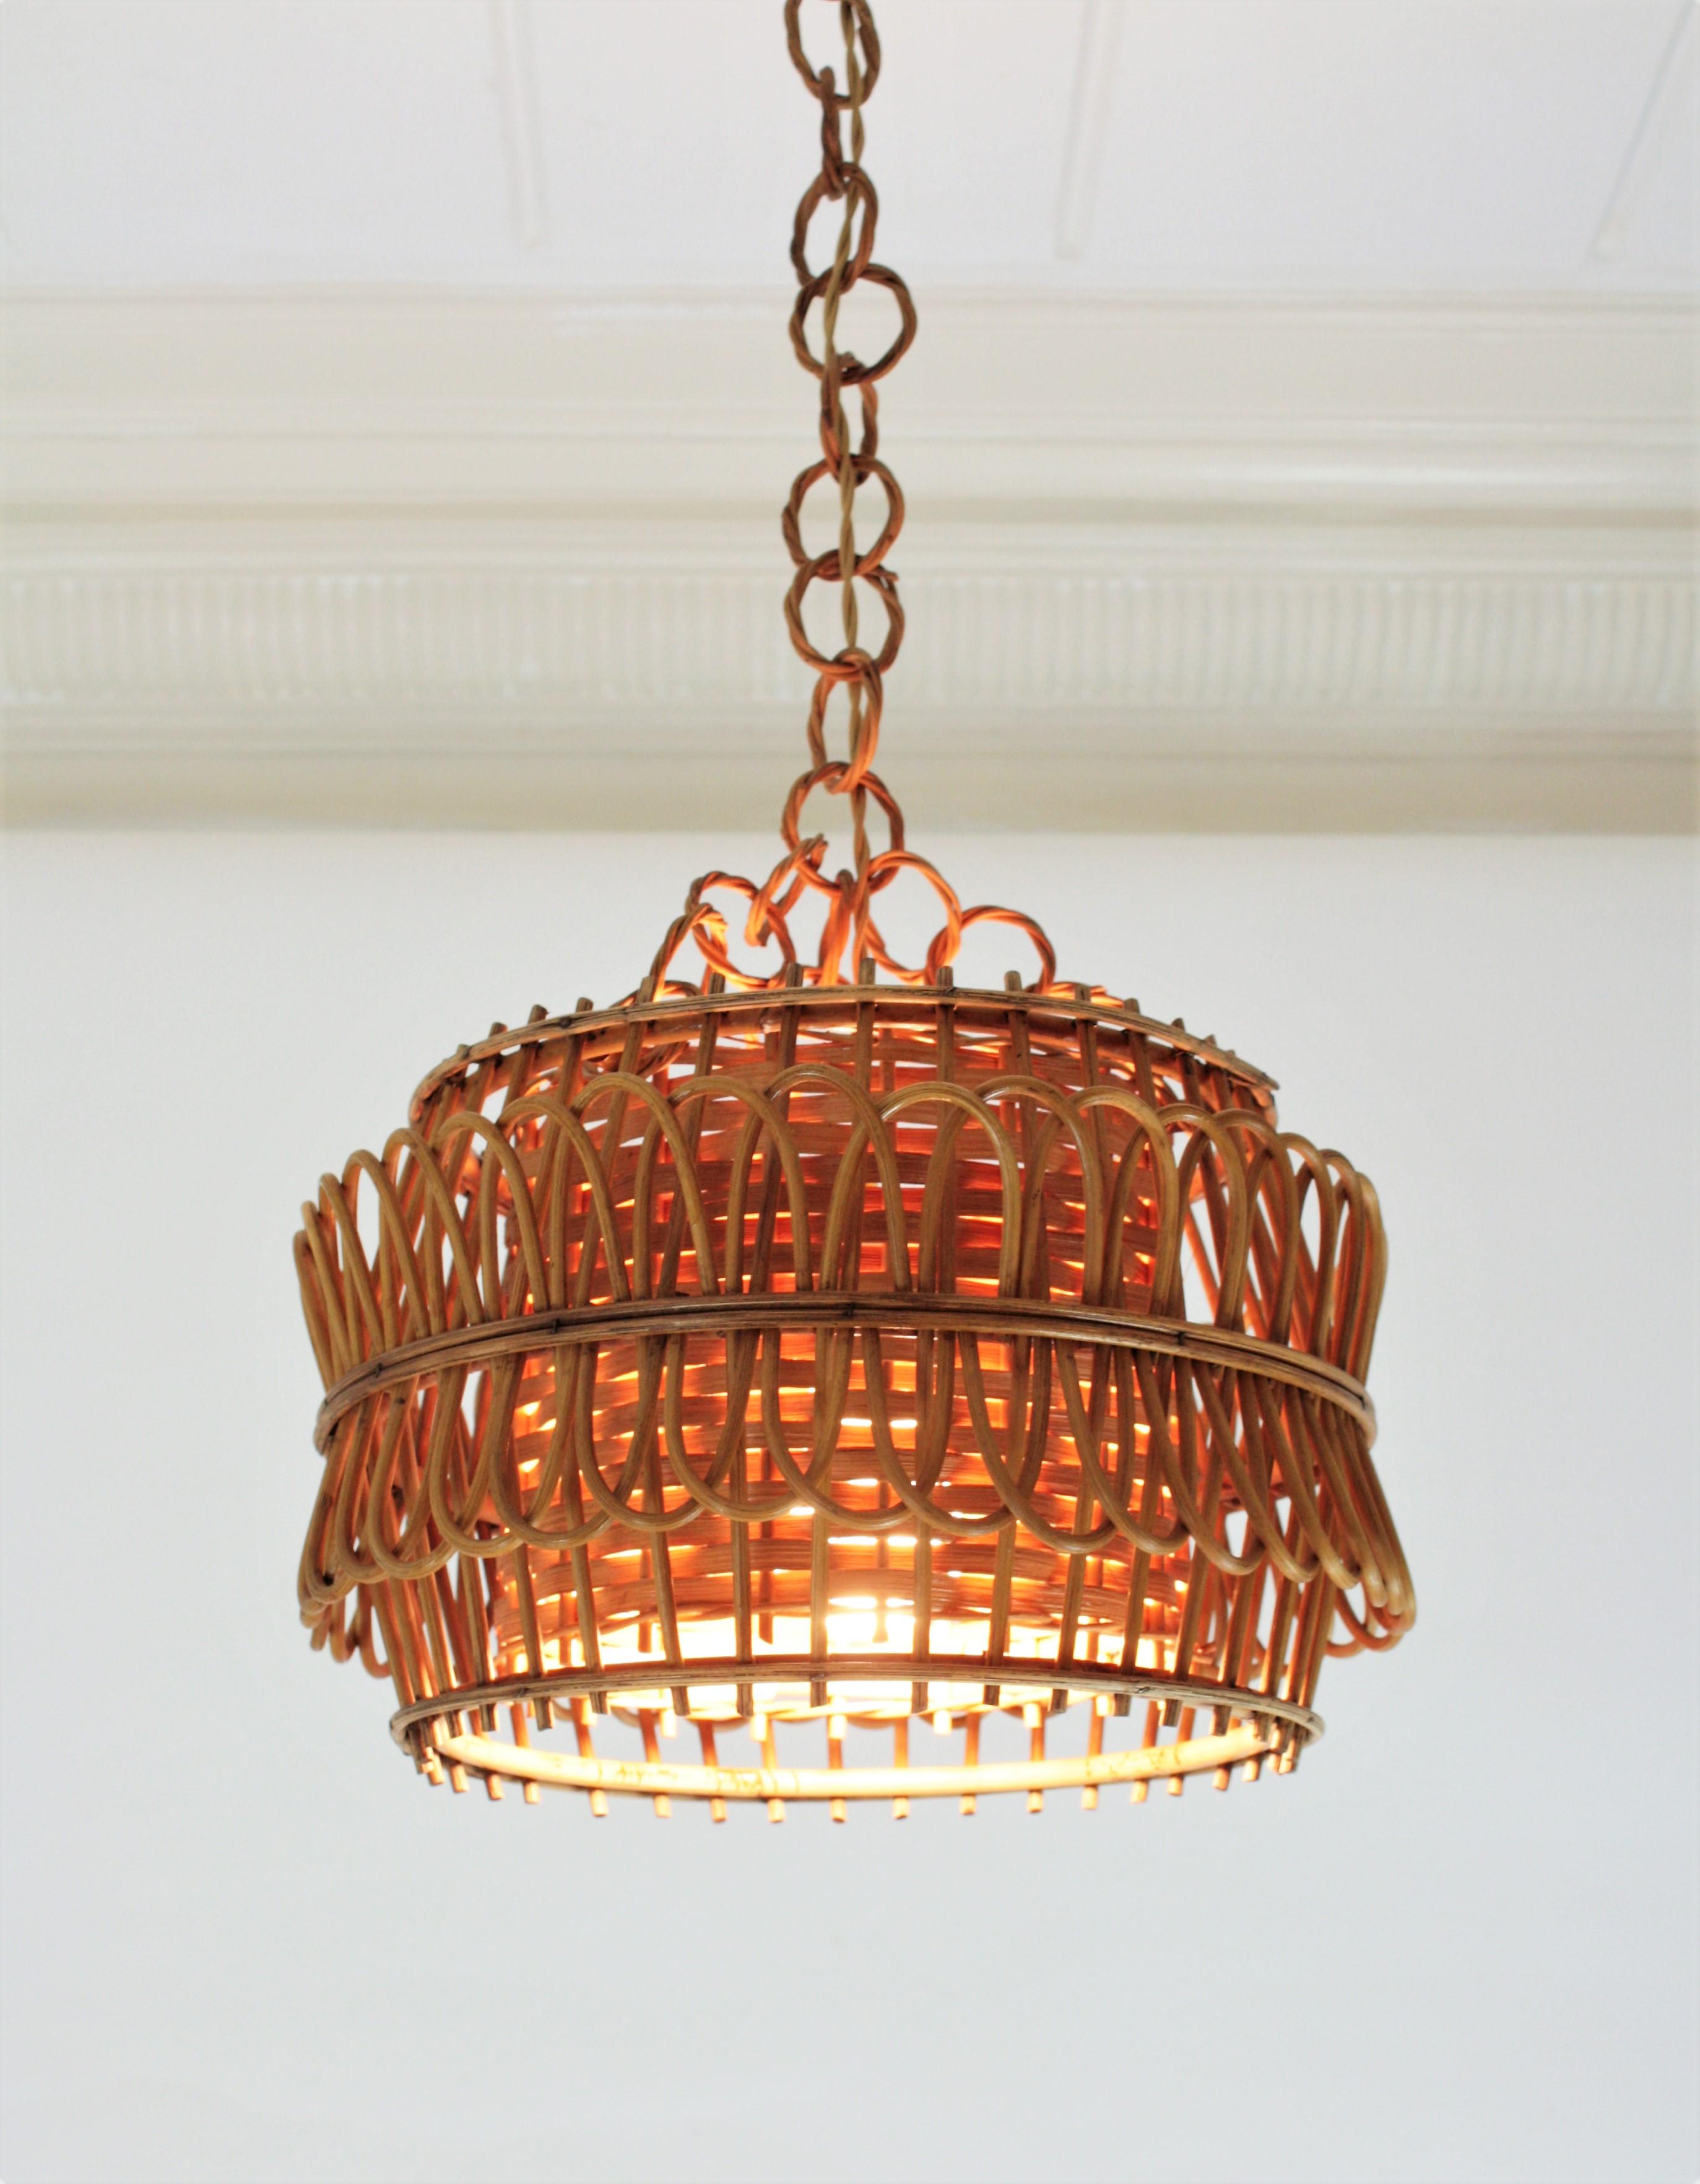 Spanish Modernist Rattan Pendant Lamp / Hanging Light with Woven Wicker Shade 3